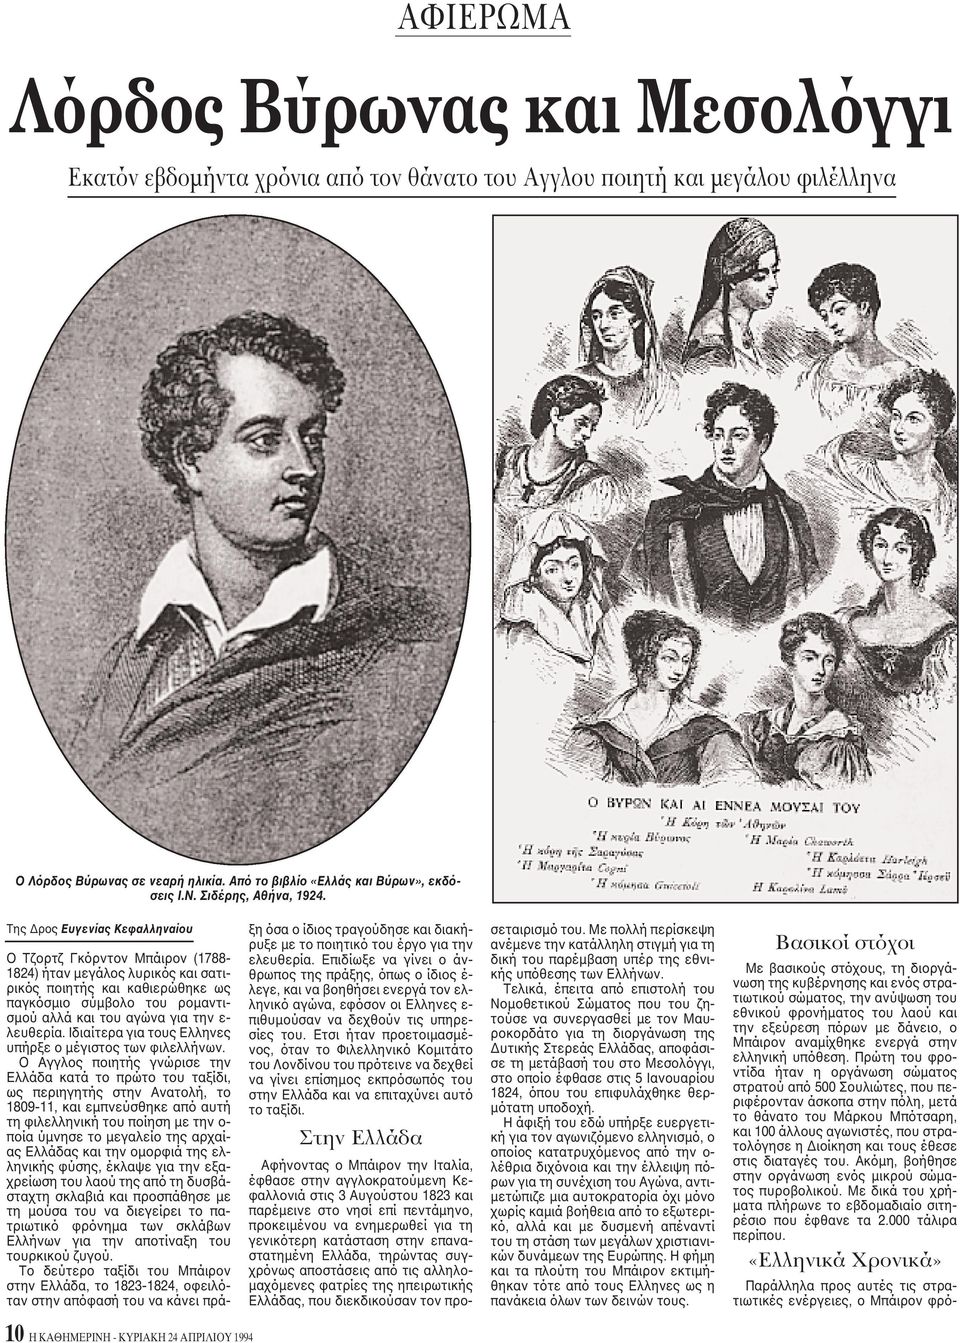 Tης Δρος Eυγενίας Kεφαλληναίου O Tζορτζ Γκόρντον Mπάιρον (1788-1824) ήταν μεγάλος λυρικός και σατιρικός ποιητής και καθιερώθηκε ως παγκόσμιο σύμβολο του ρομαντισμού αλλά και του αγώνα για την ε-